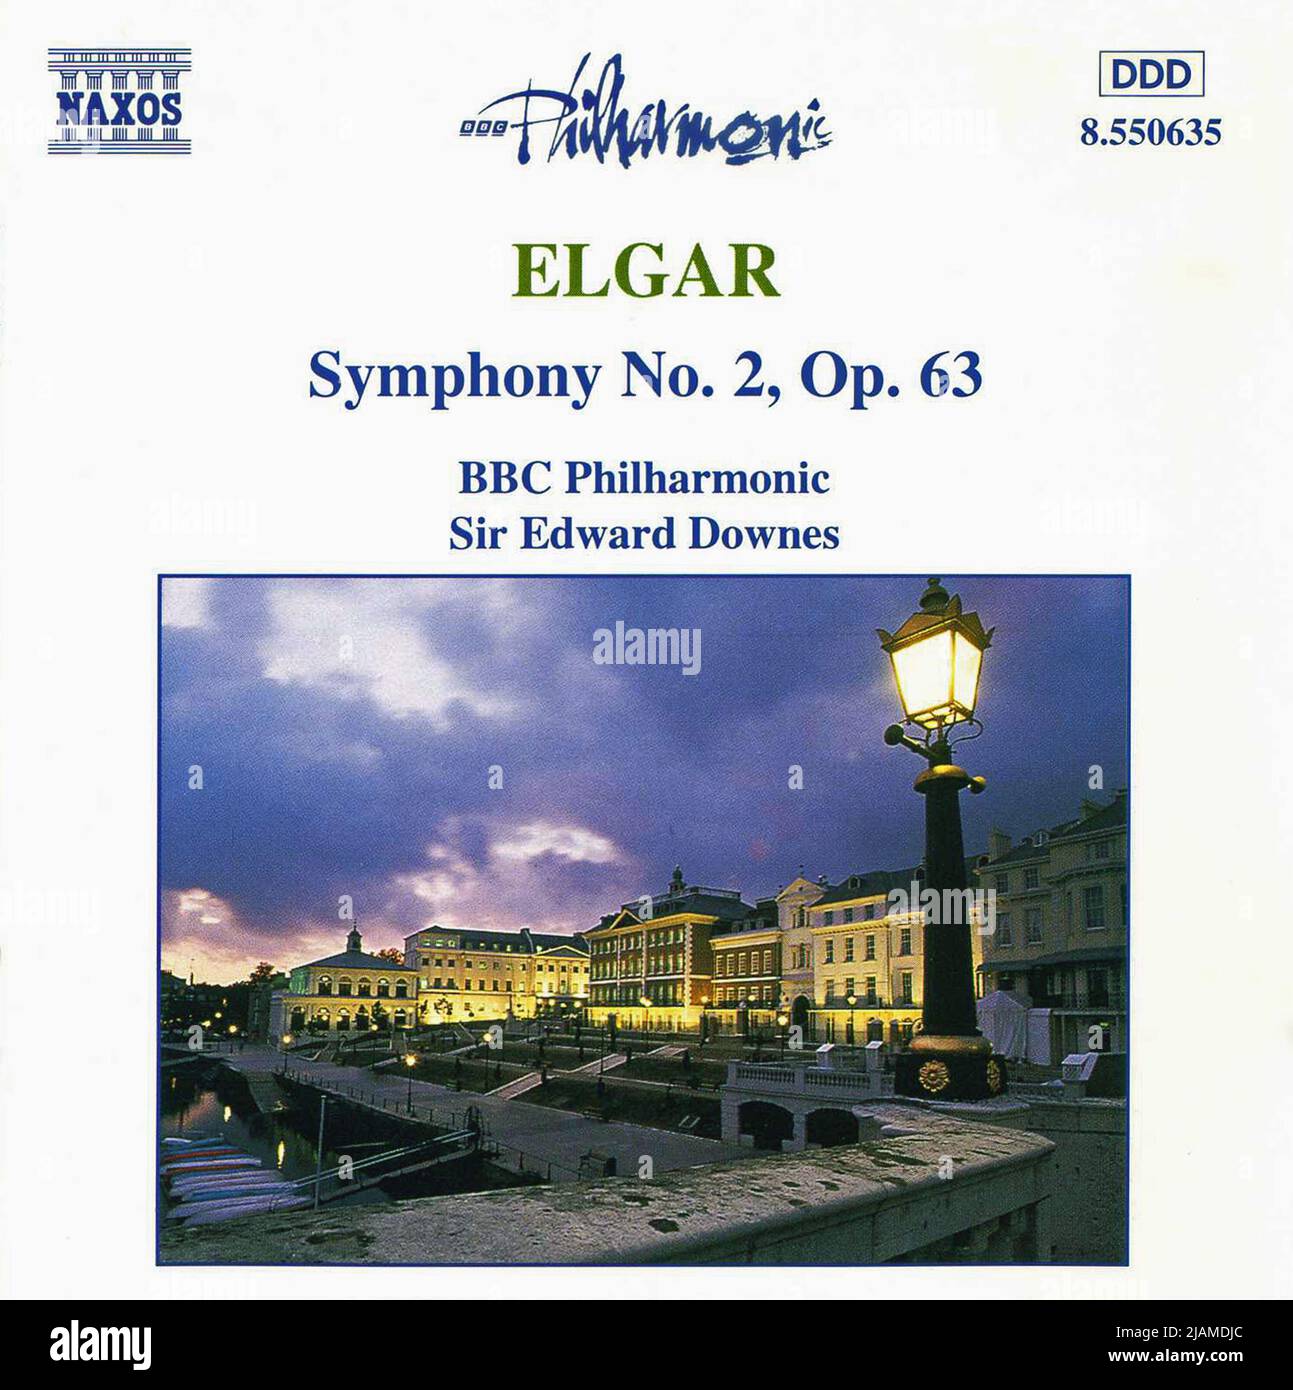 Cubierta de CD. 'Sinfonía nº 2, op.63', Edward Elgar. BBC Filarmónica. Sir Edward Downes. Foto de stock